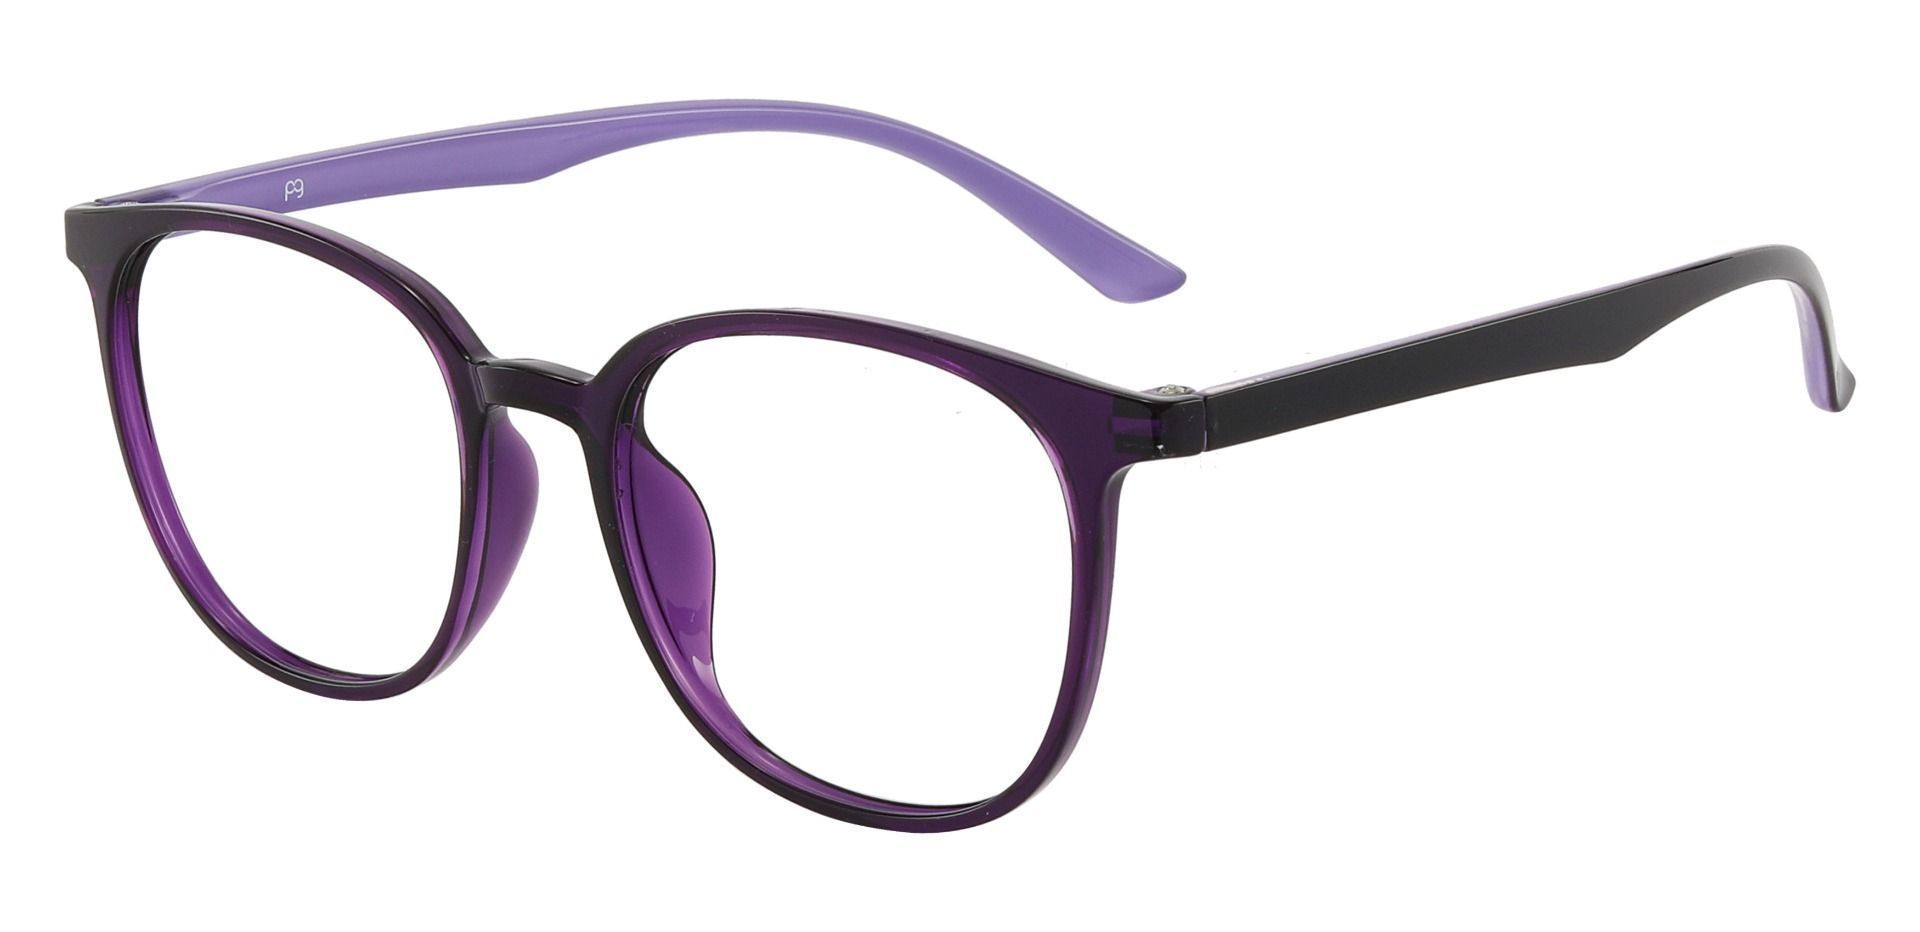 Kelso Square Reading Glasses - Purple